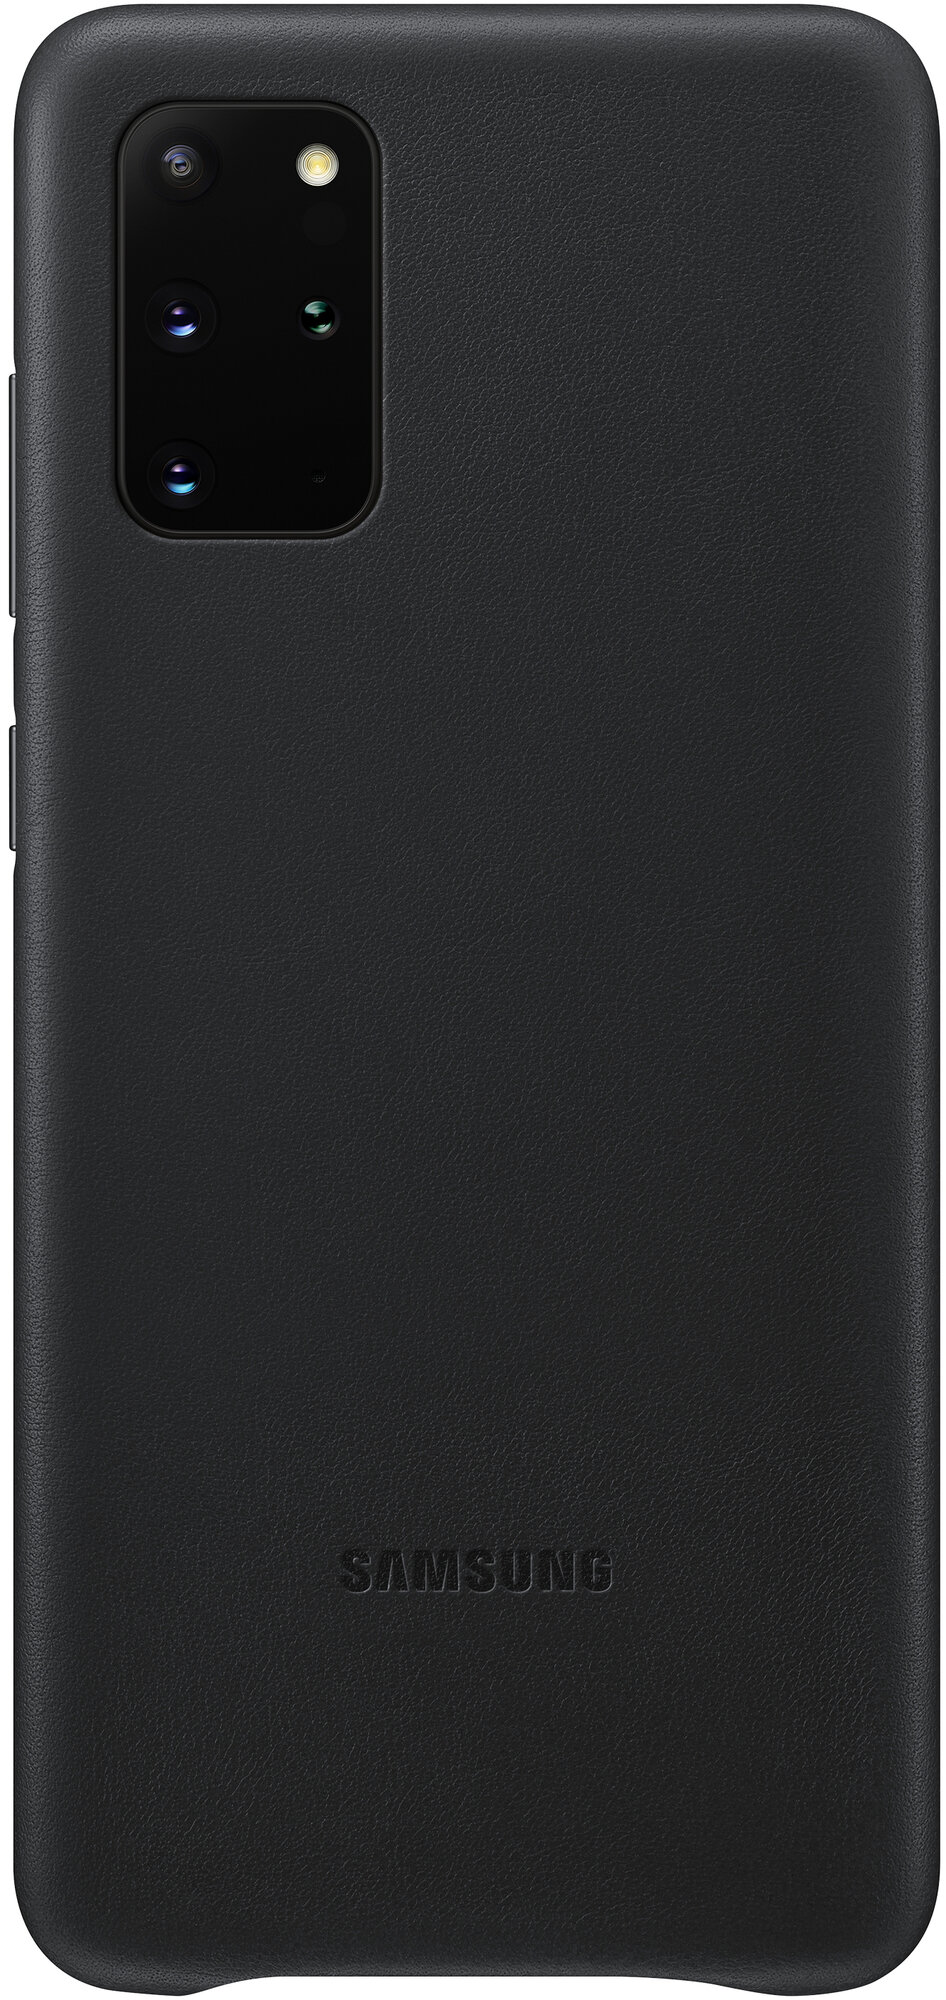 Чехол Samsung Leather Cover для Galaxy S20+ S20+ 5G, Черный, EF-VG985LBEGRU